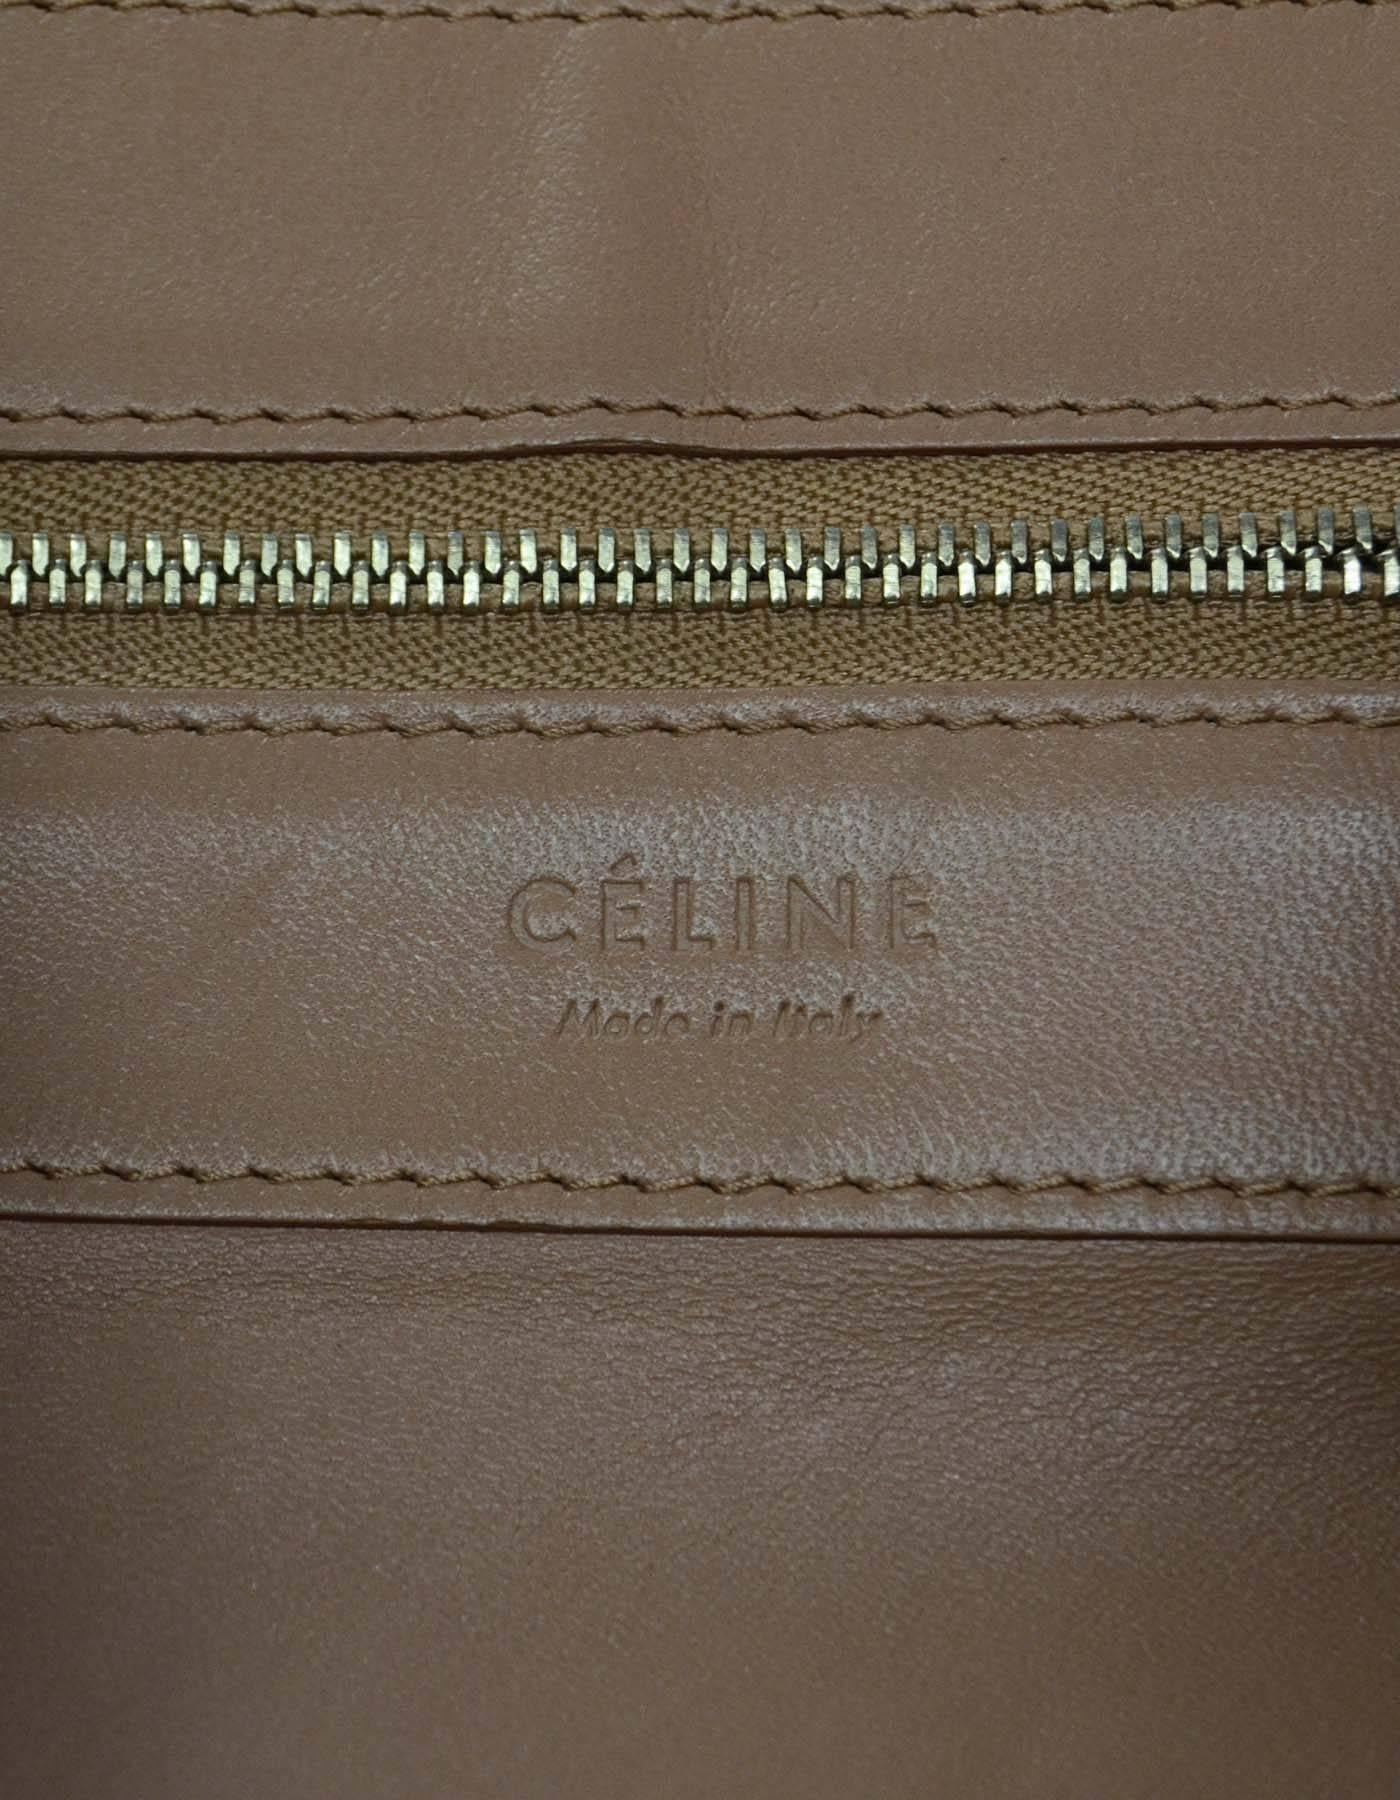 Celine Black & Tan Leather Bi-Cabas Tote rt. $1, 290 2